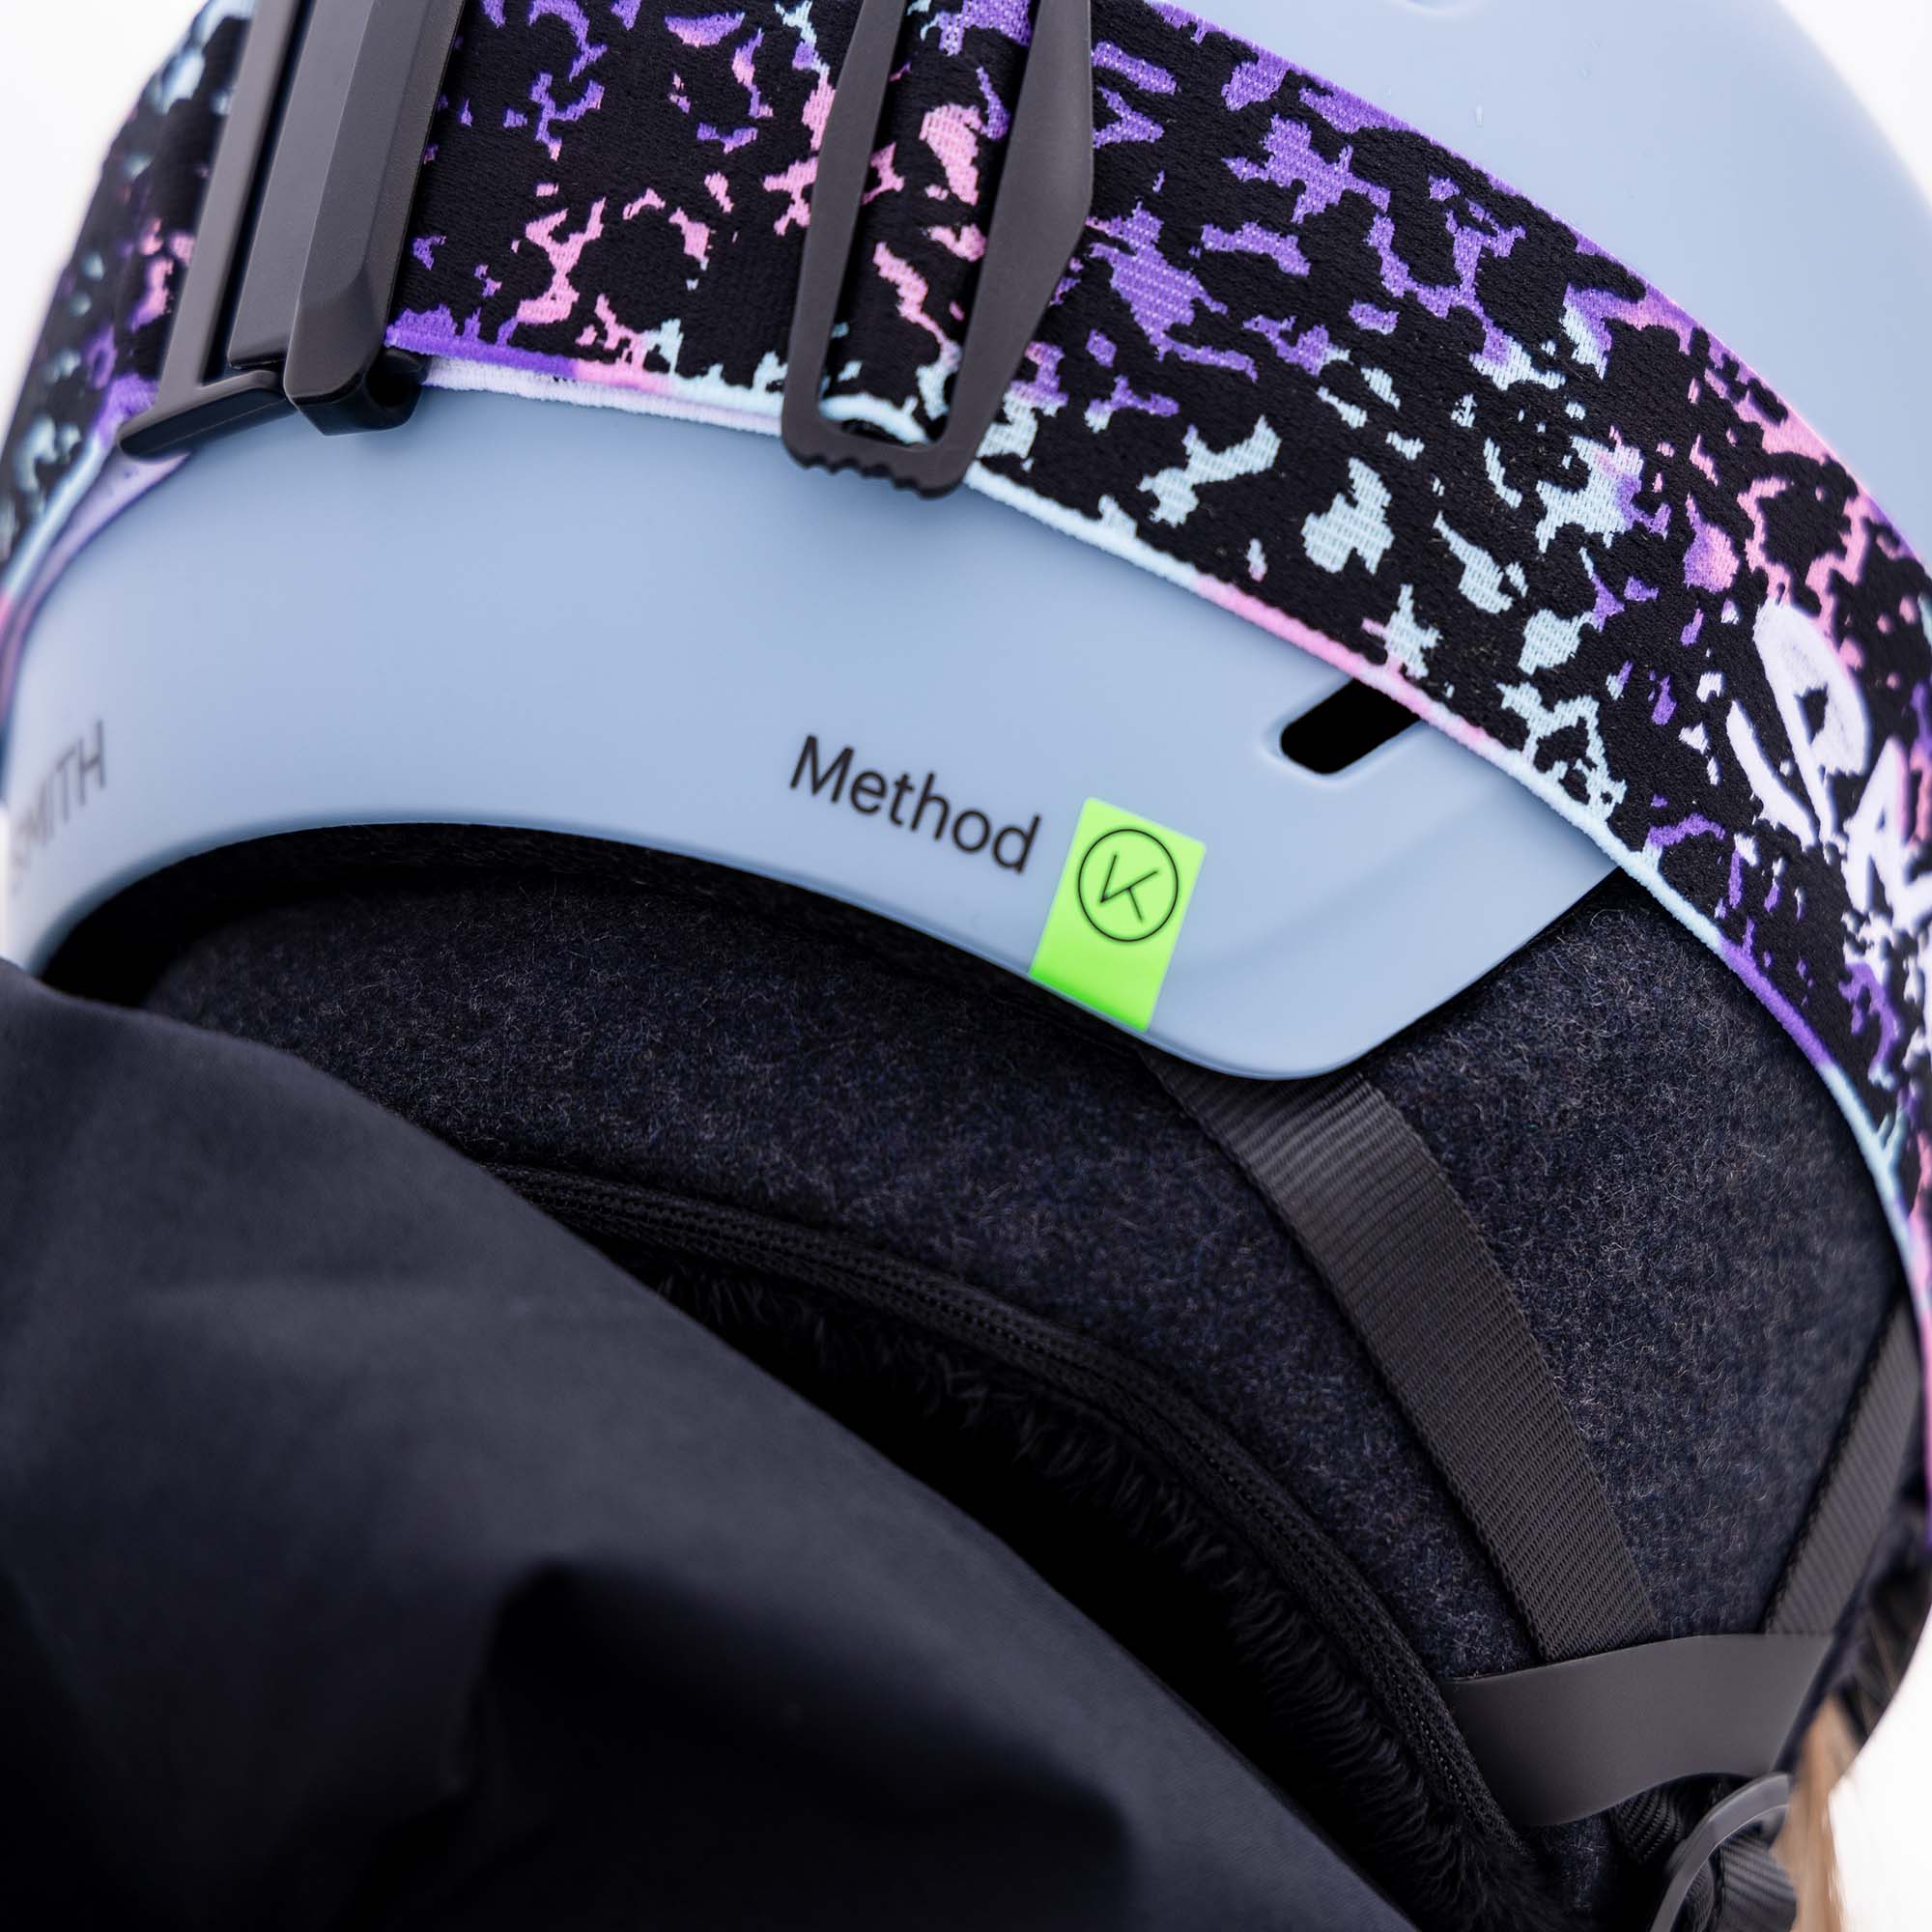 Smith Method MIPS Snowboard/Ski Helmet